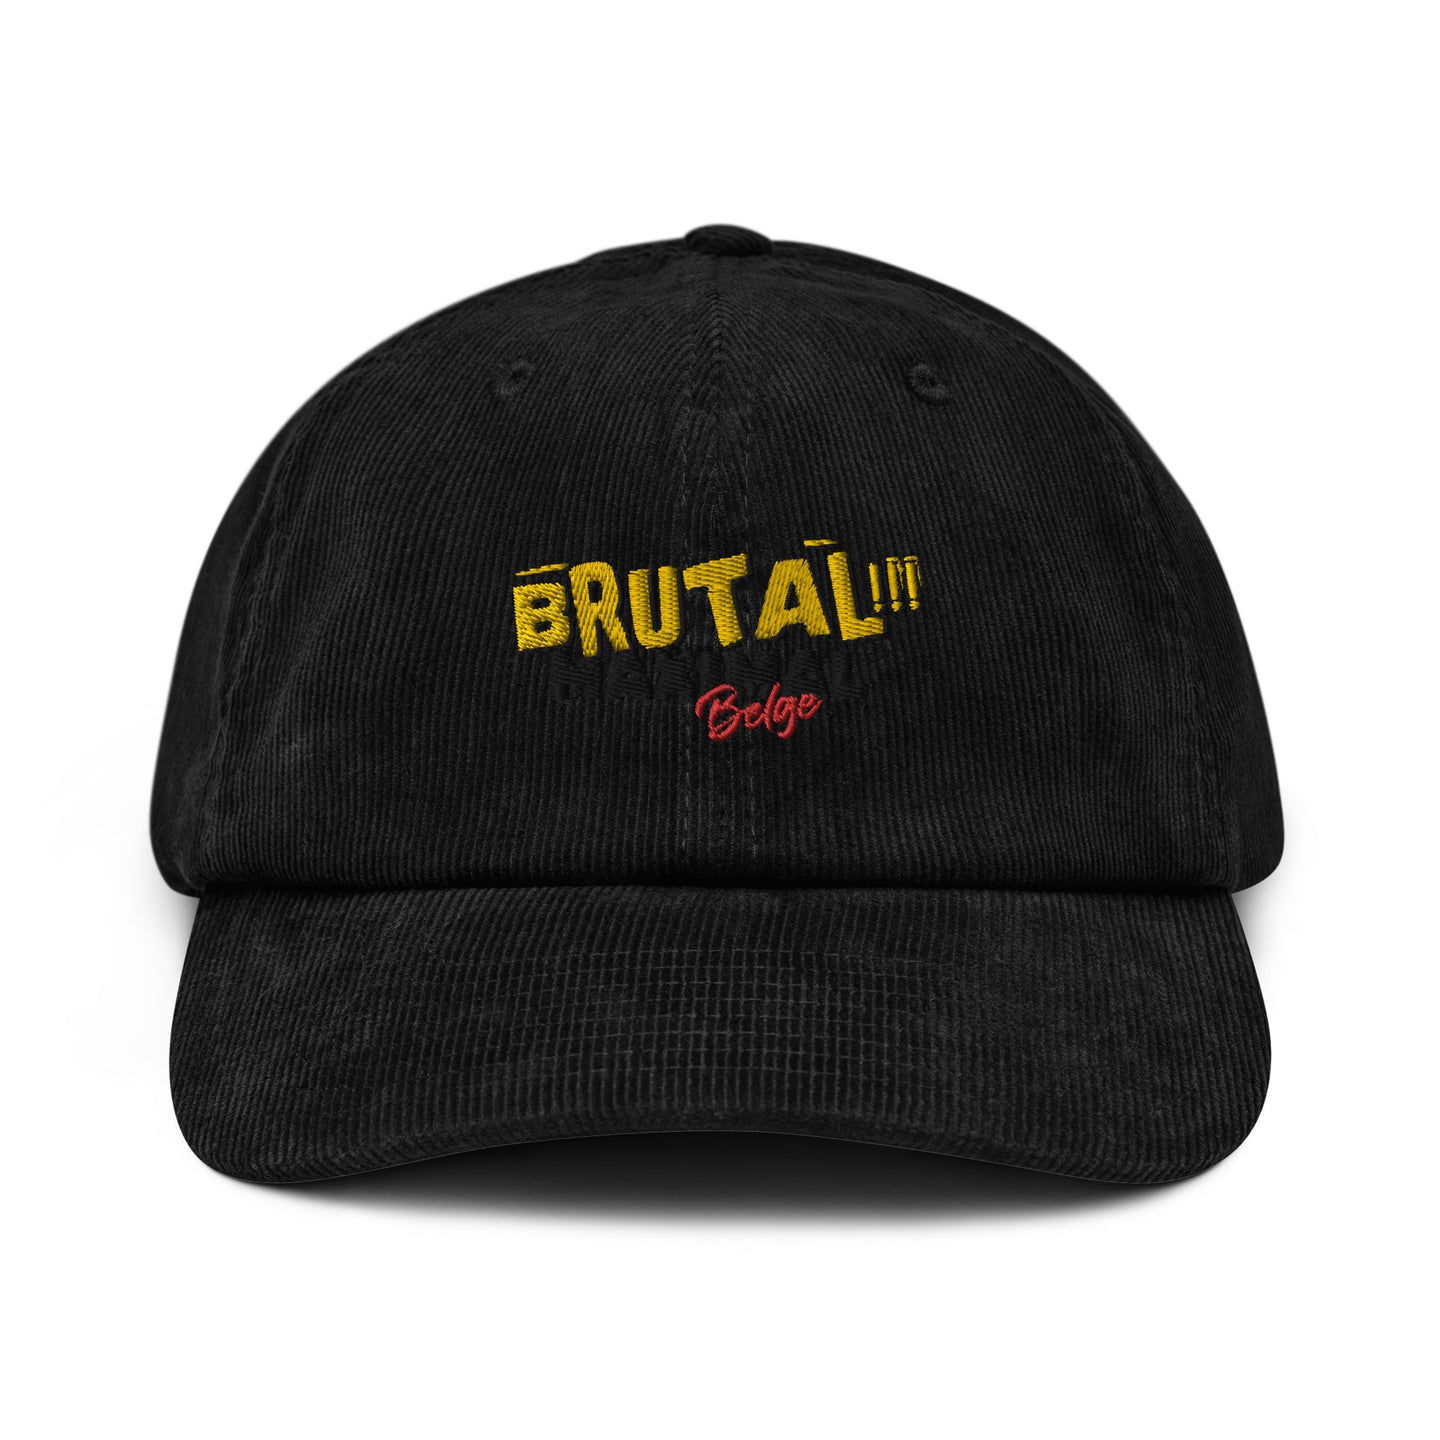 Corduroy hat - Brutal Maximal Belge